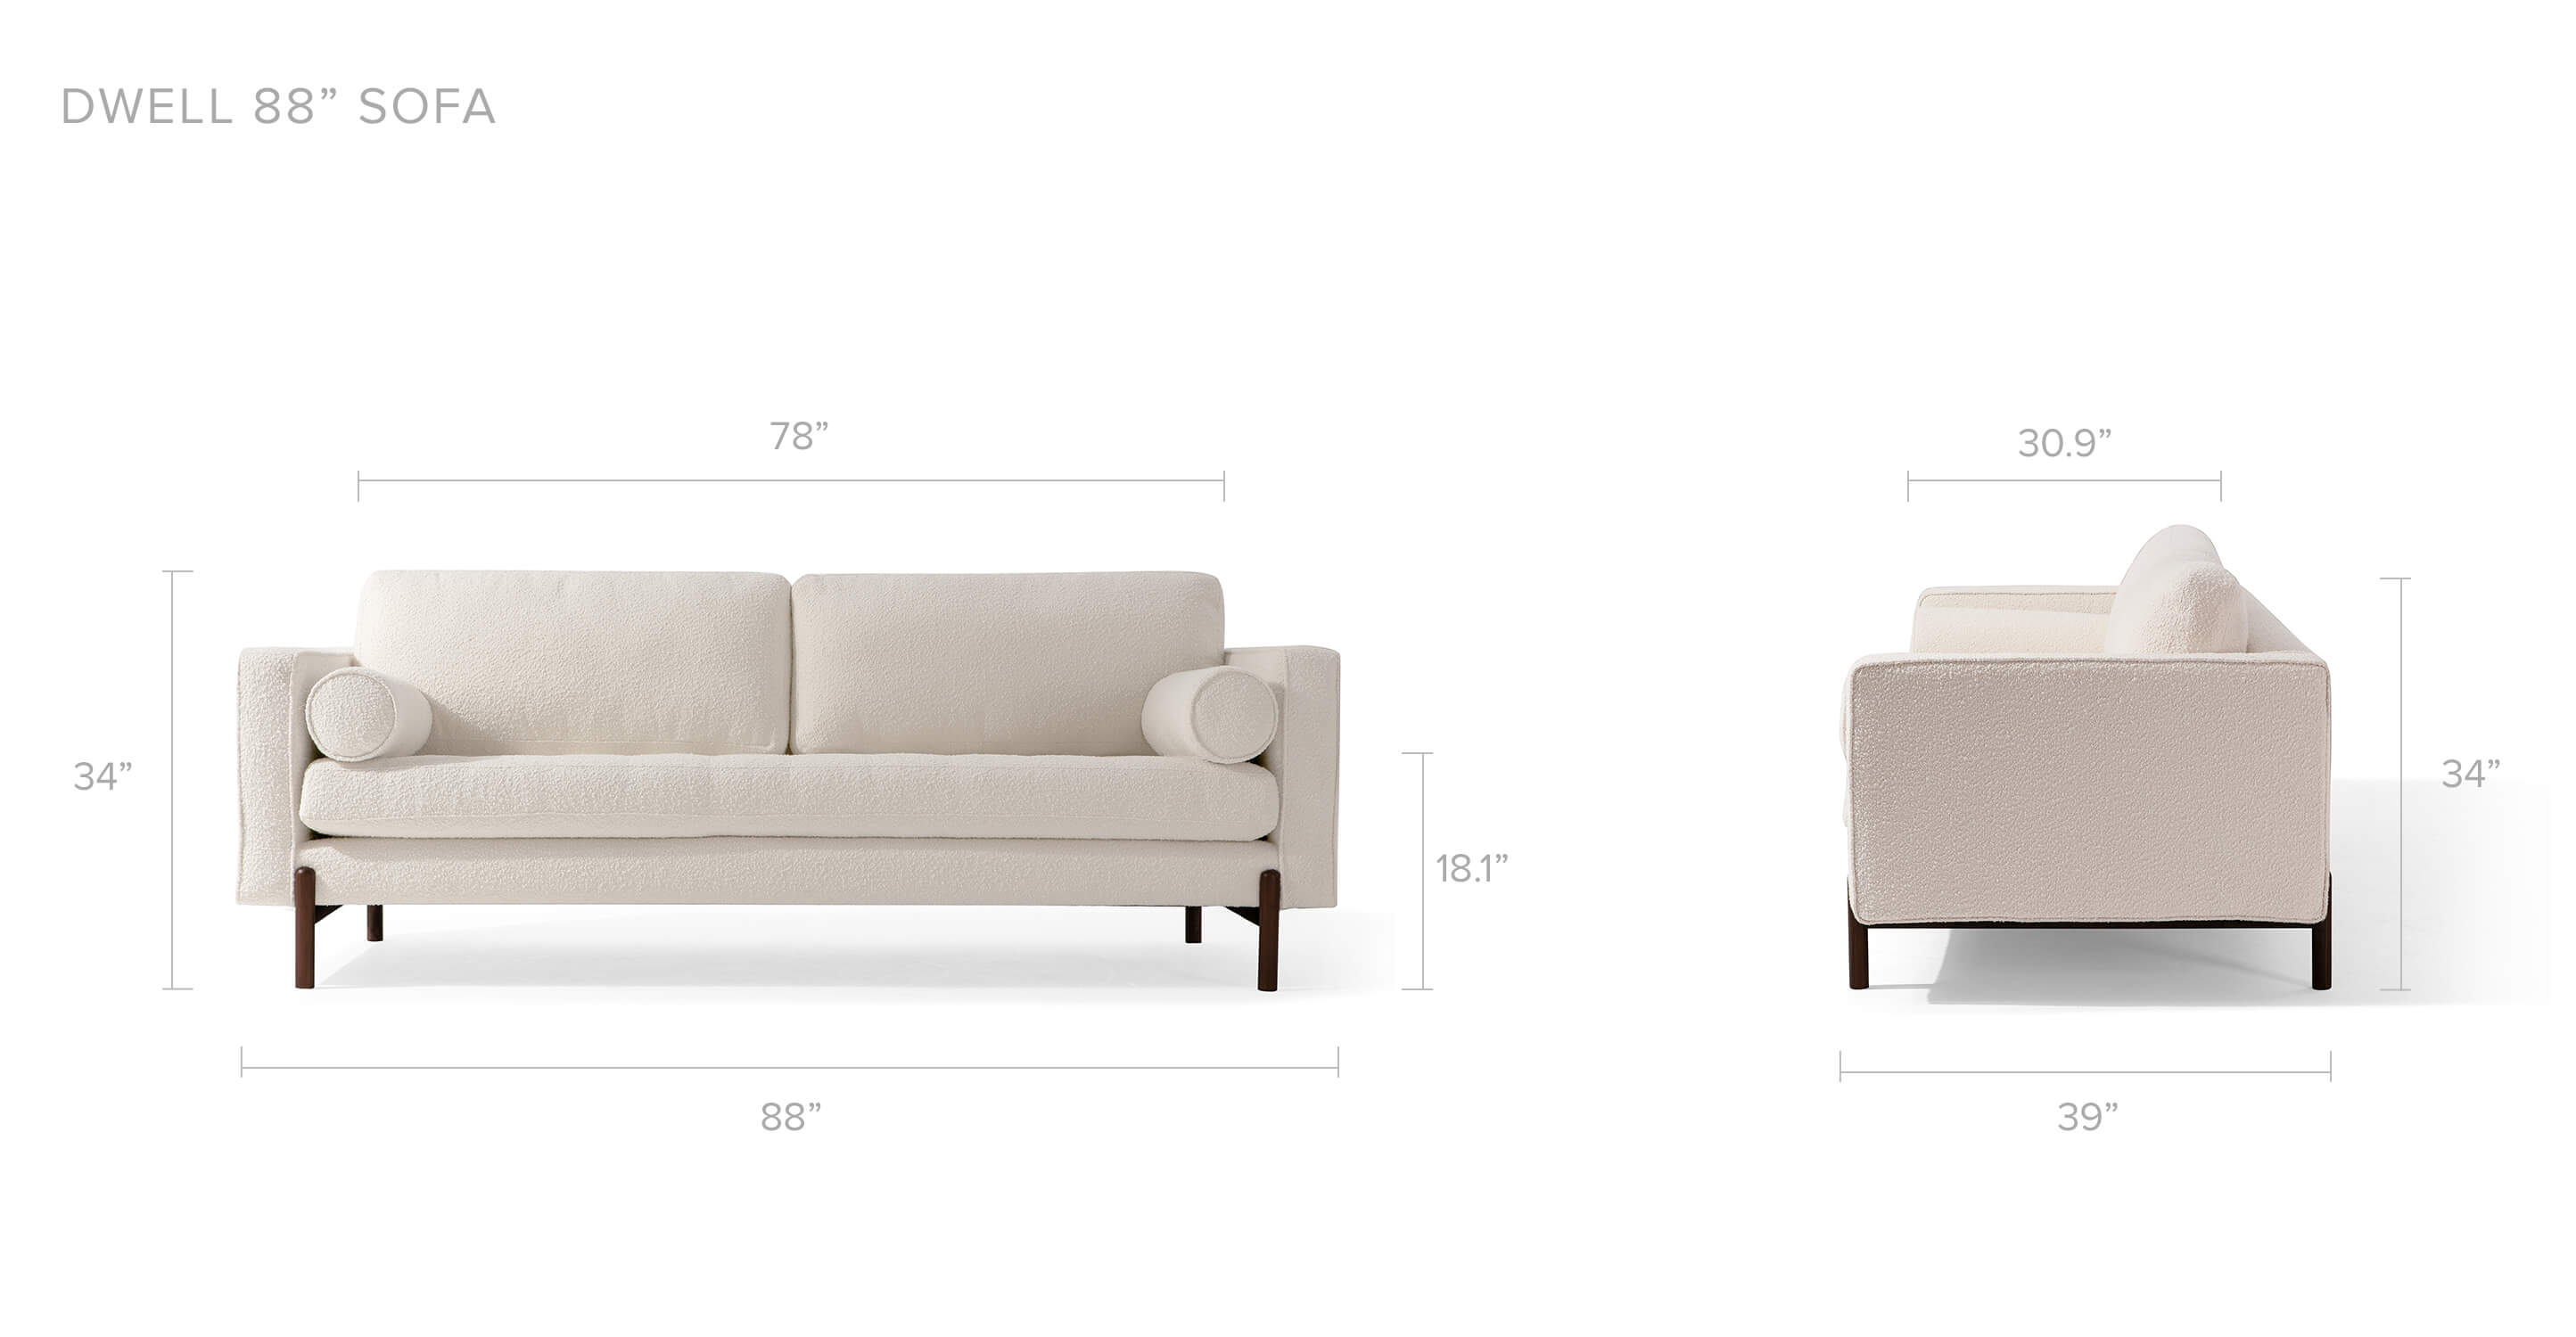 Blanc Boucle Dwell 88" Fabric Sofa